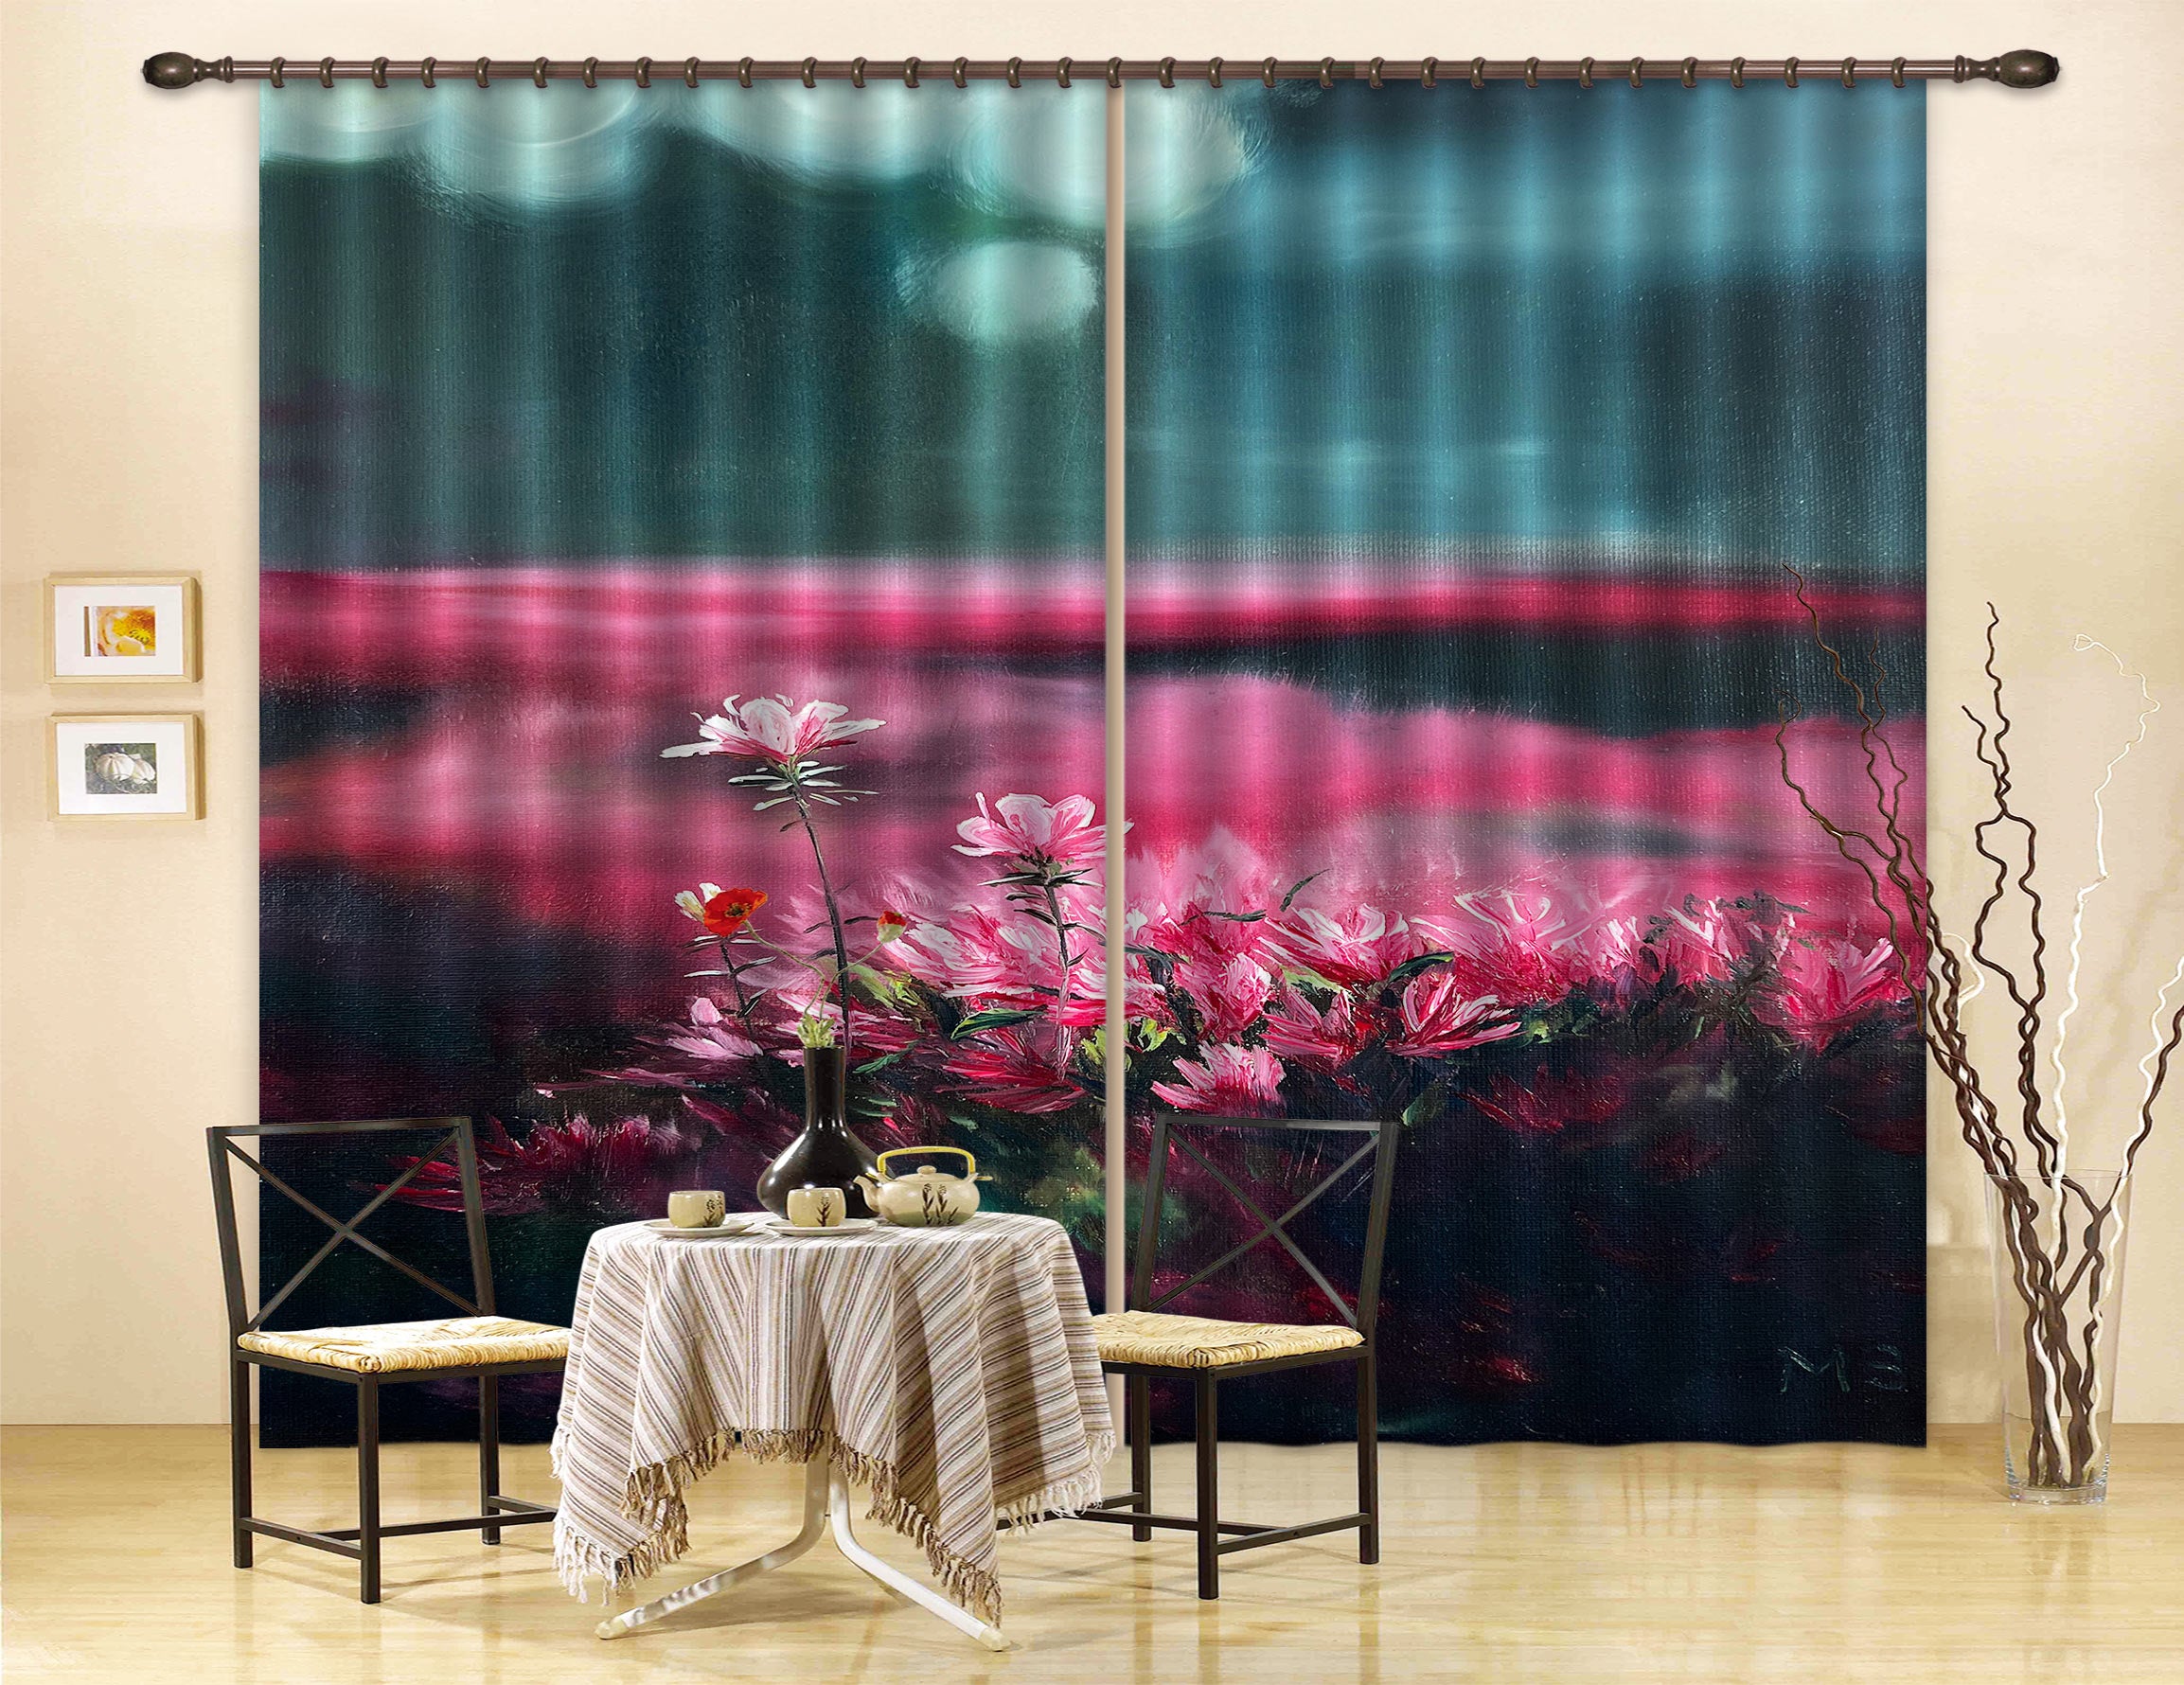 3D Red Small Flower Bush 9756 Marina Zotova Curtain Curtains Drapes